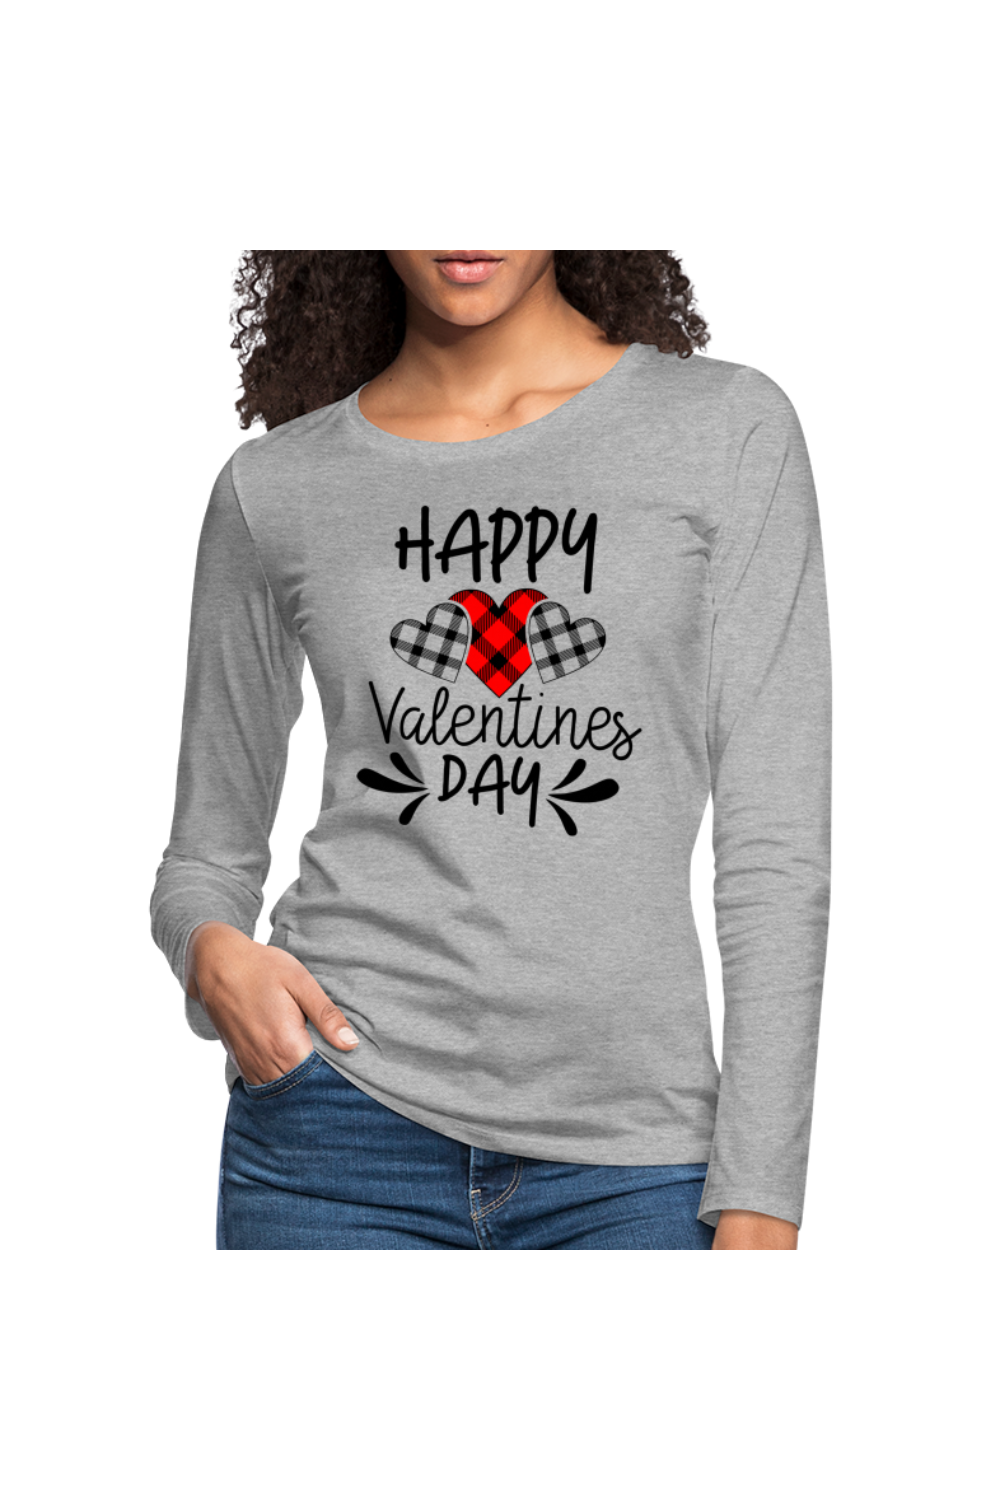 Women's Happy Valentine's Day Long Sleeve T-Shirt - heather gray - NicholesGifts.online